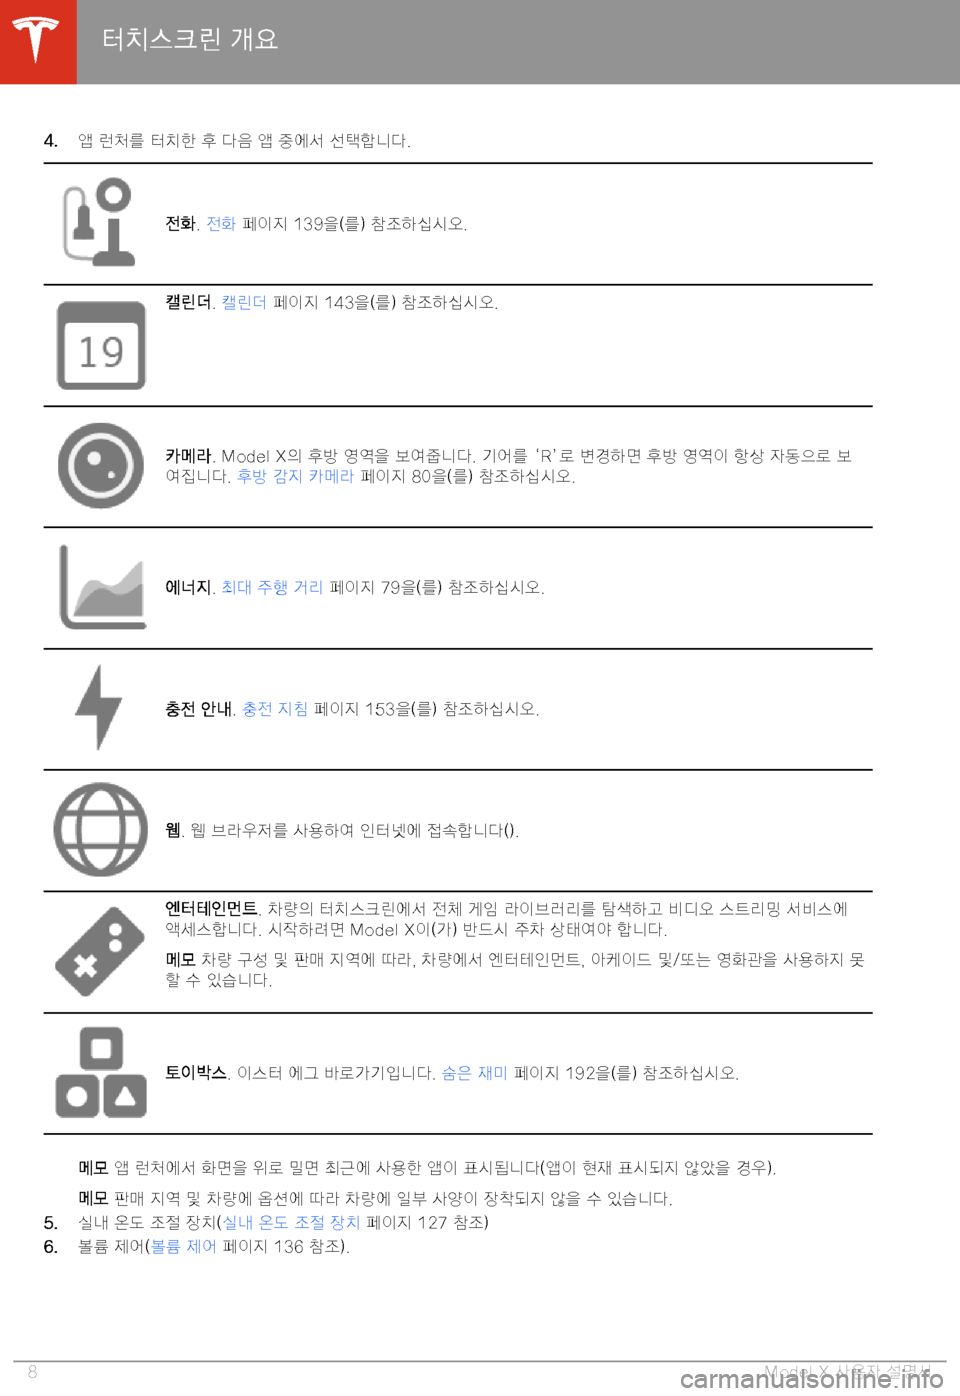 TESLA MODEL X 2020  사용자 가이드 (in Korean)  �4�.q� -